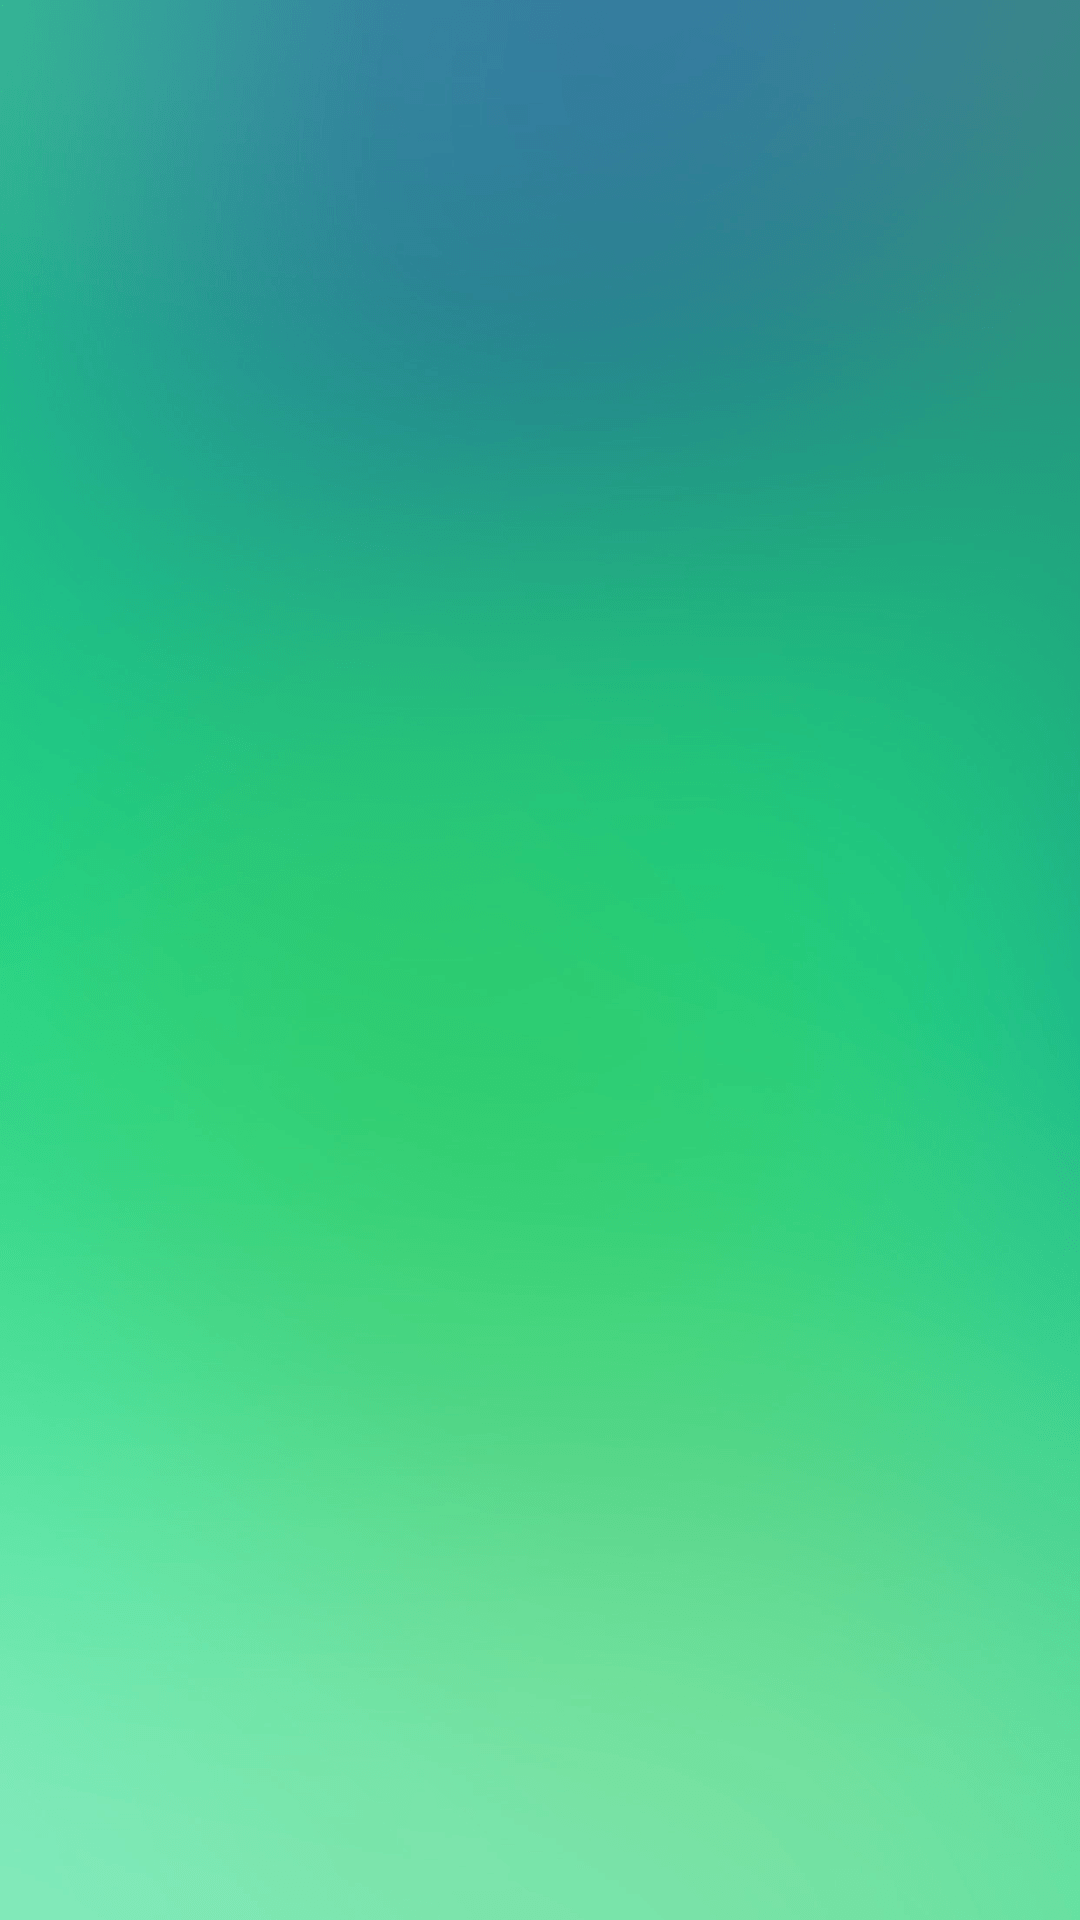 Emerald Green iPhone 6 Plus Wallpaper (1080x1920)